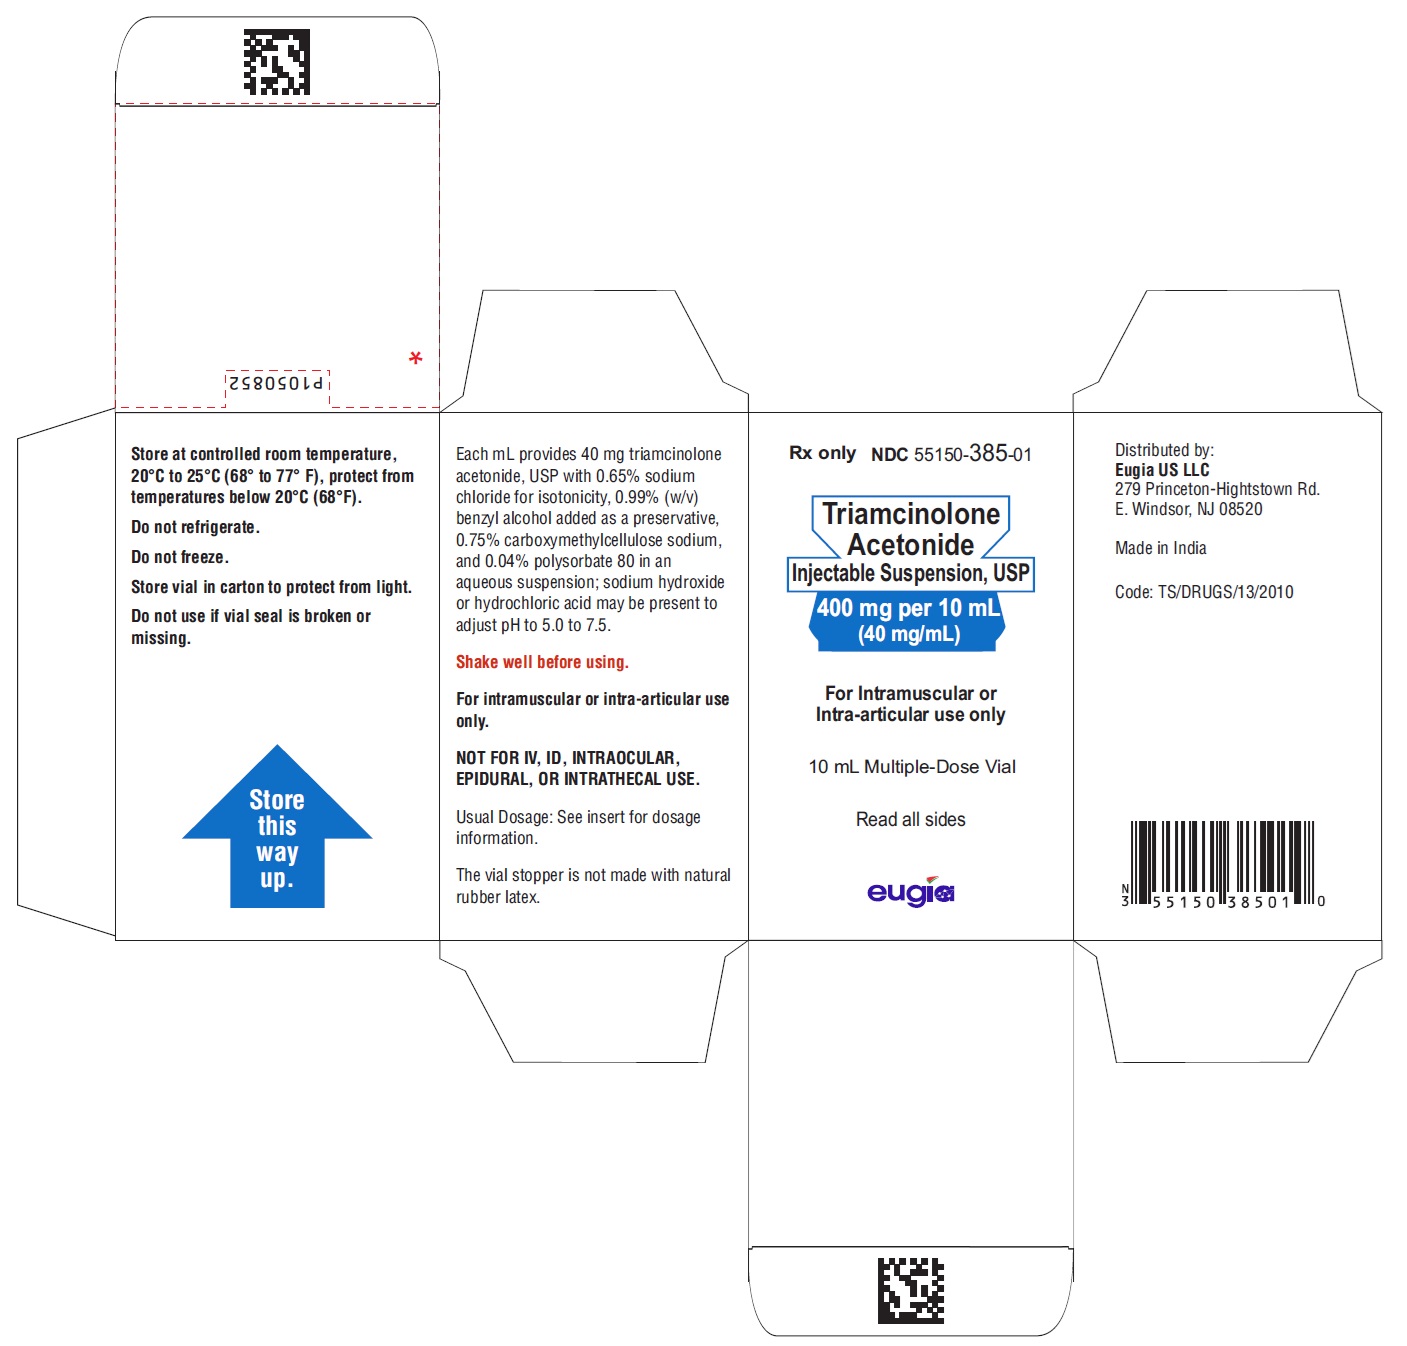 PACKAGE LABEL-PRINCIPAL DISPLAY PANEL-400 mg per 10 mL (40 mg/mL) - Container-Carton (1 Vial)